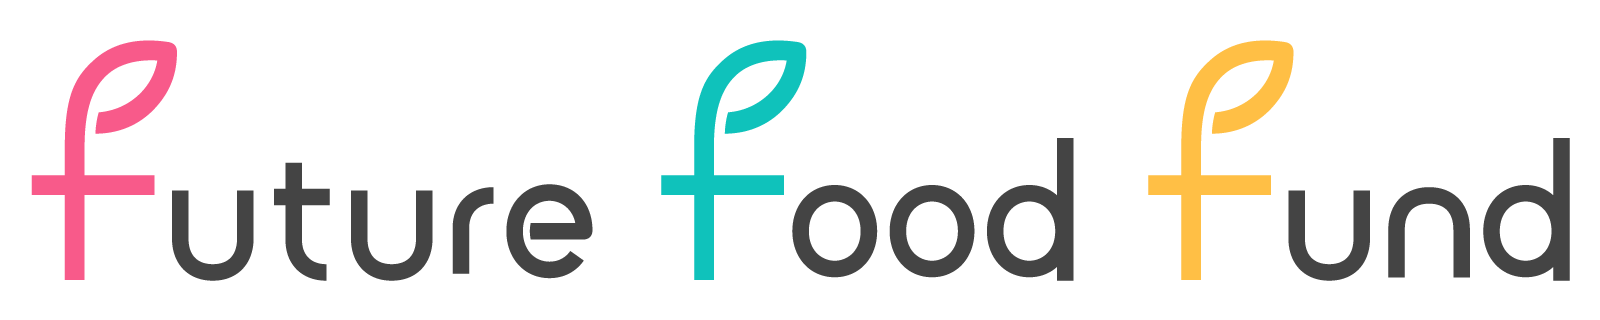 Future Food Fund Logo